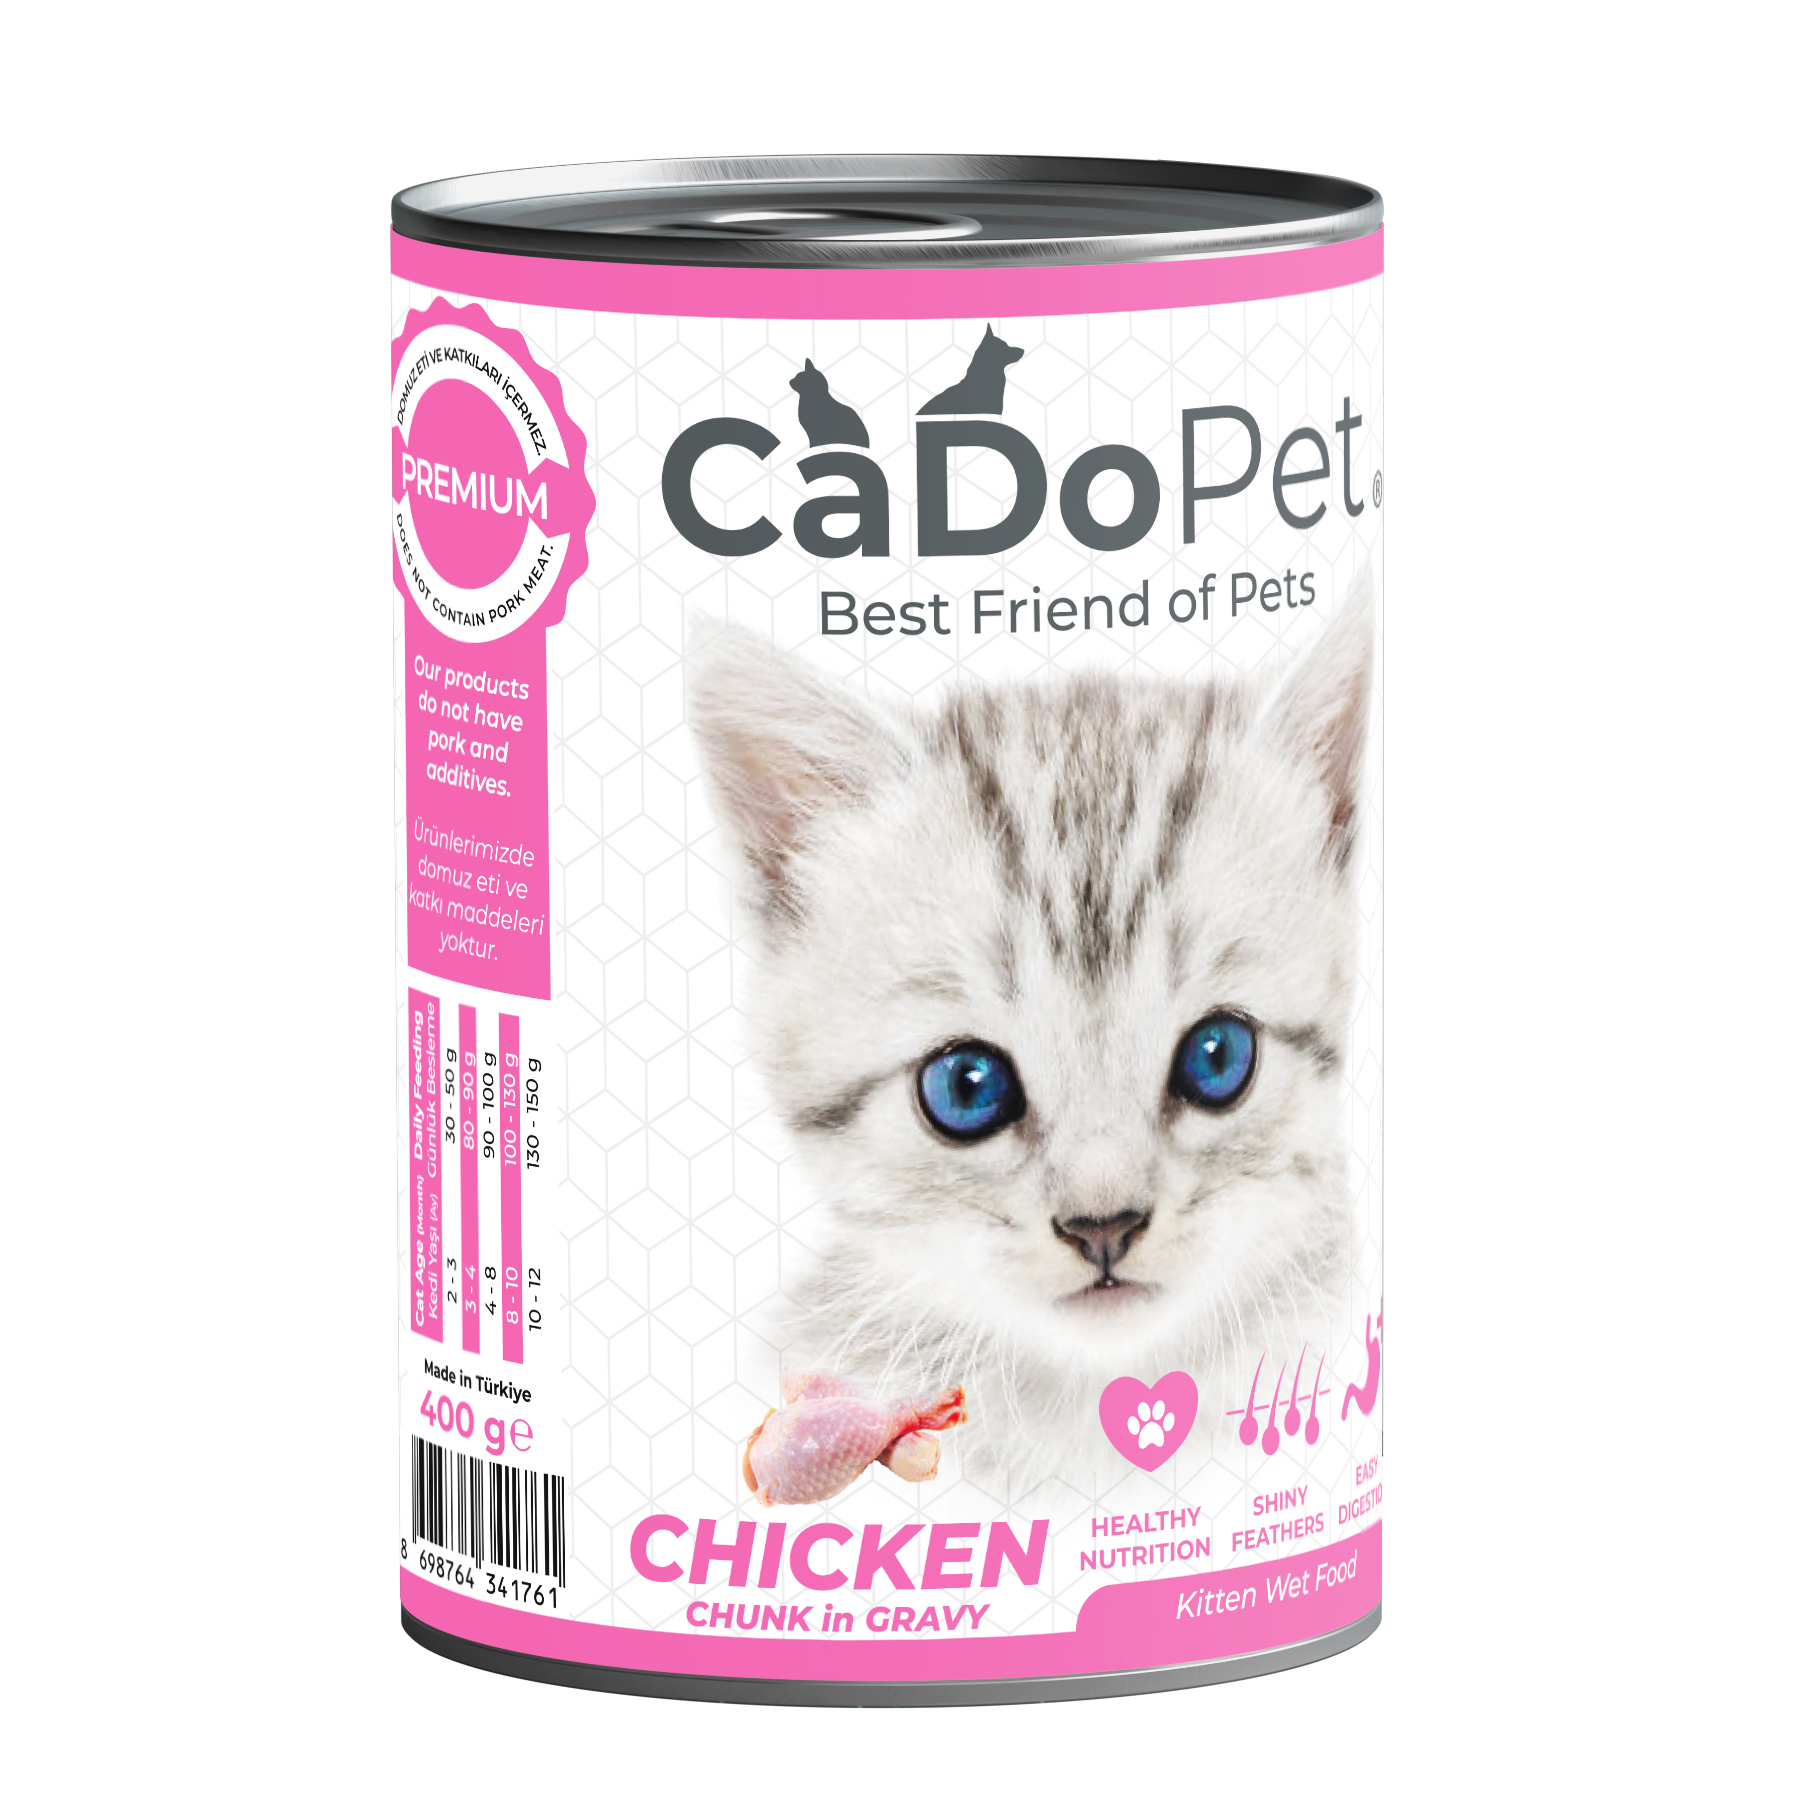 .Kitten Wet Food 400g with Chicken Chunk.